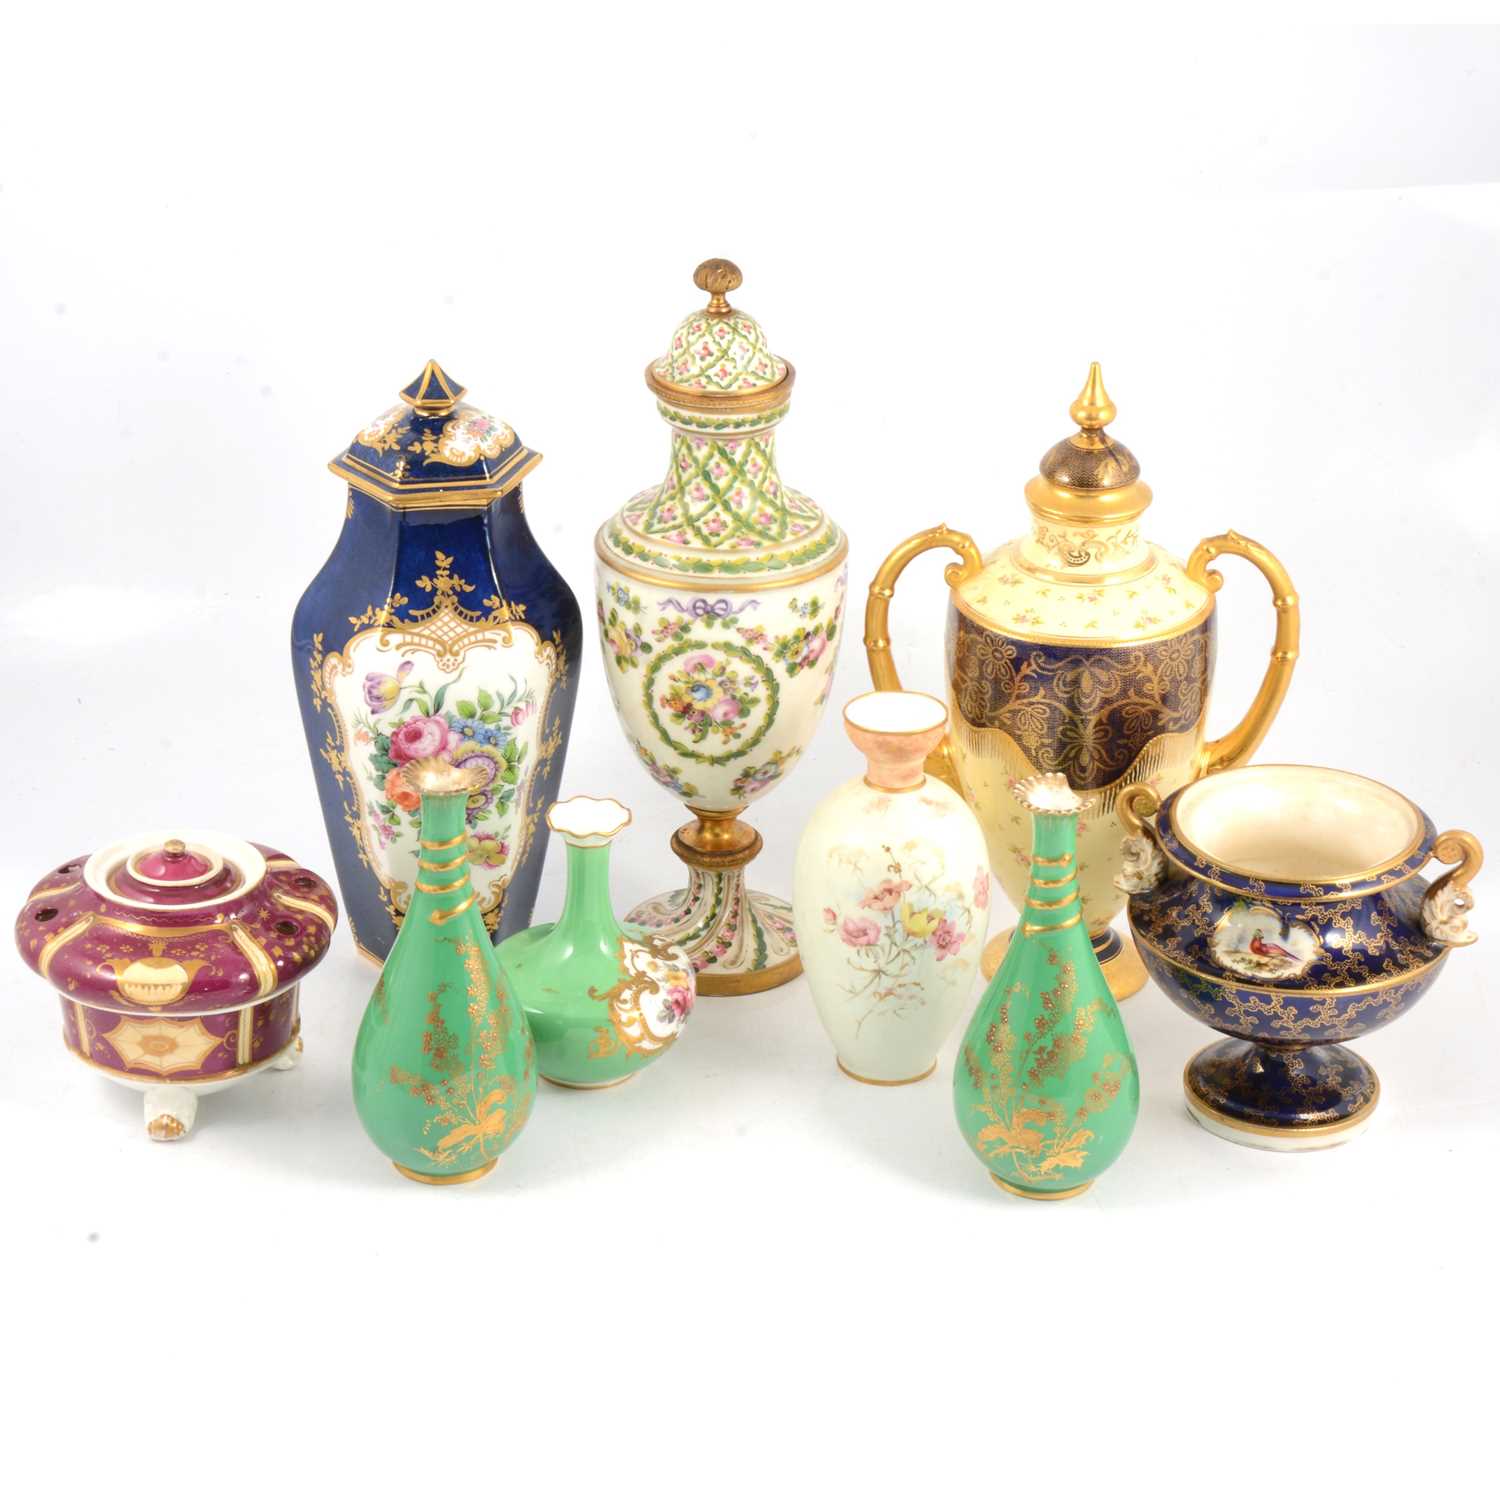 Lot 55 - Quantity of decorative ceramic vases, including Crown Derby and Coalport